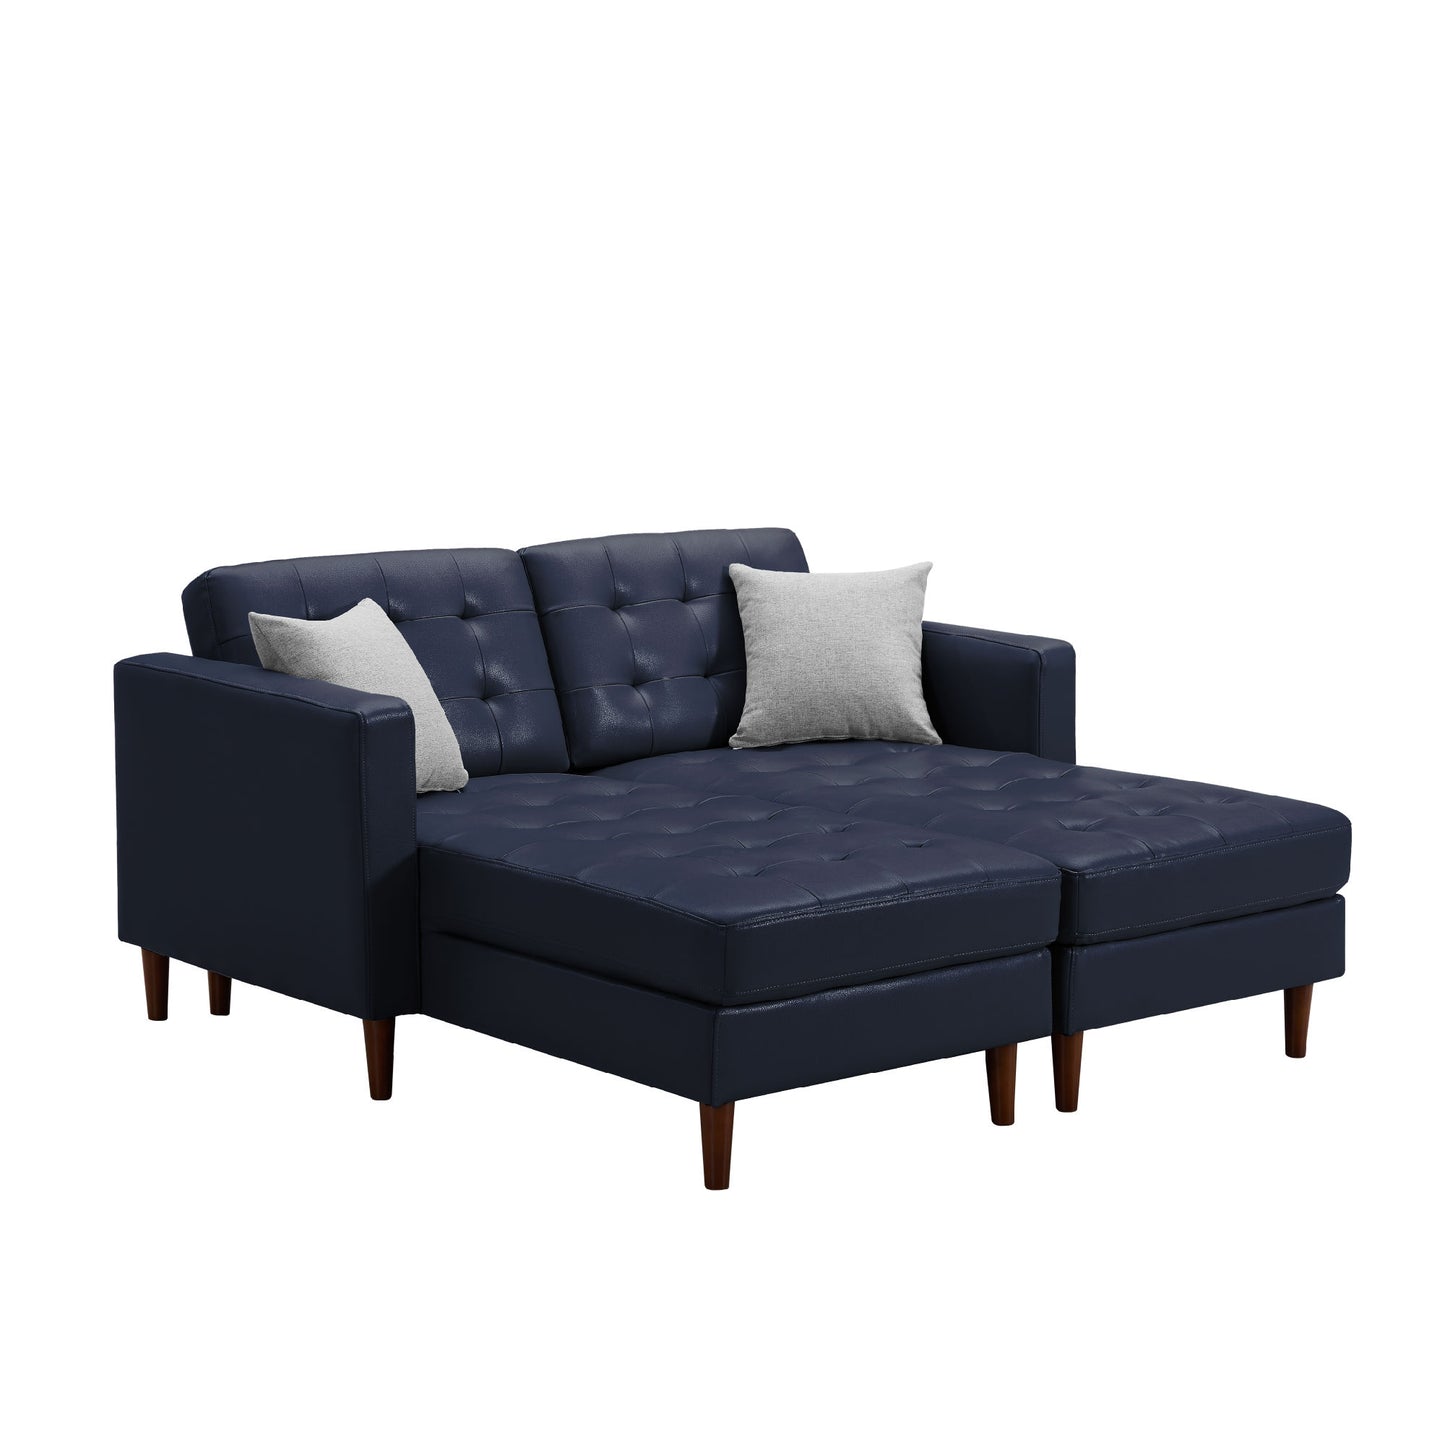 U-shaped sofa Leatherette sleeper Chaise Sofa